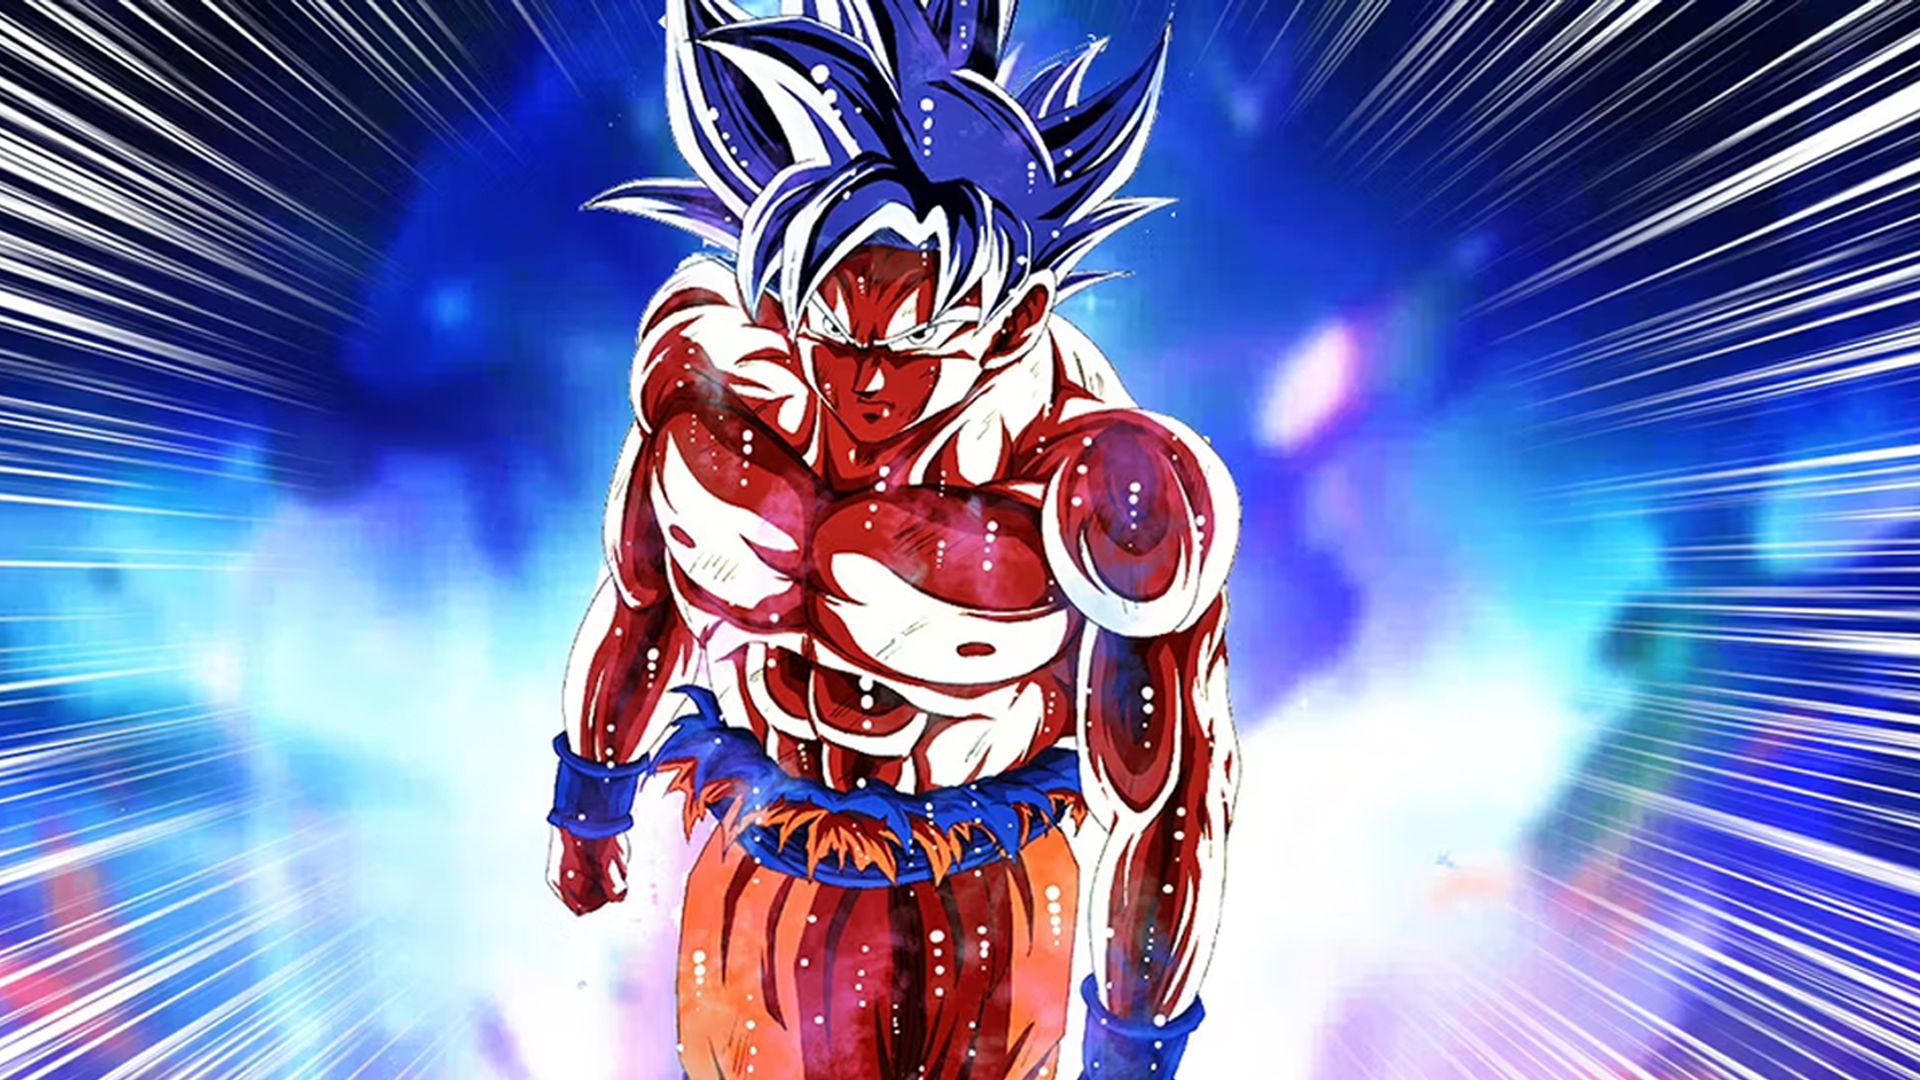 Custom Image of Ultra Instinct Goku staring angrily at the camera